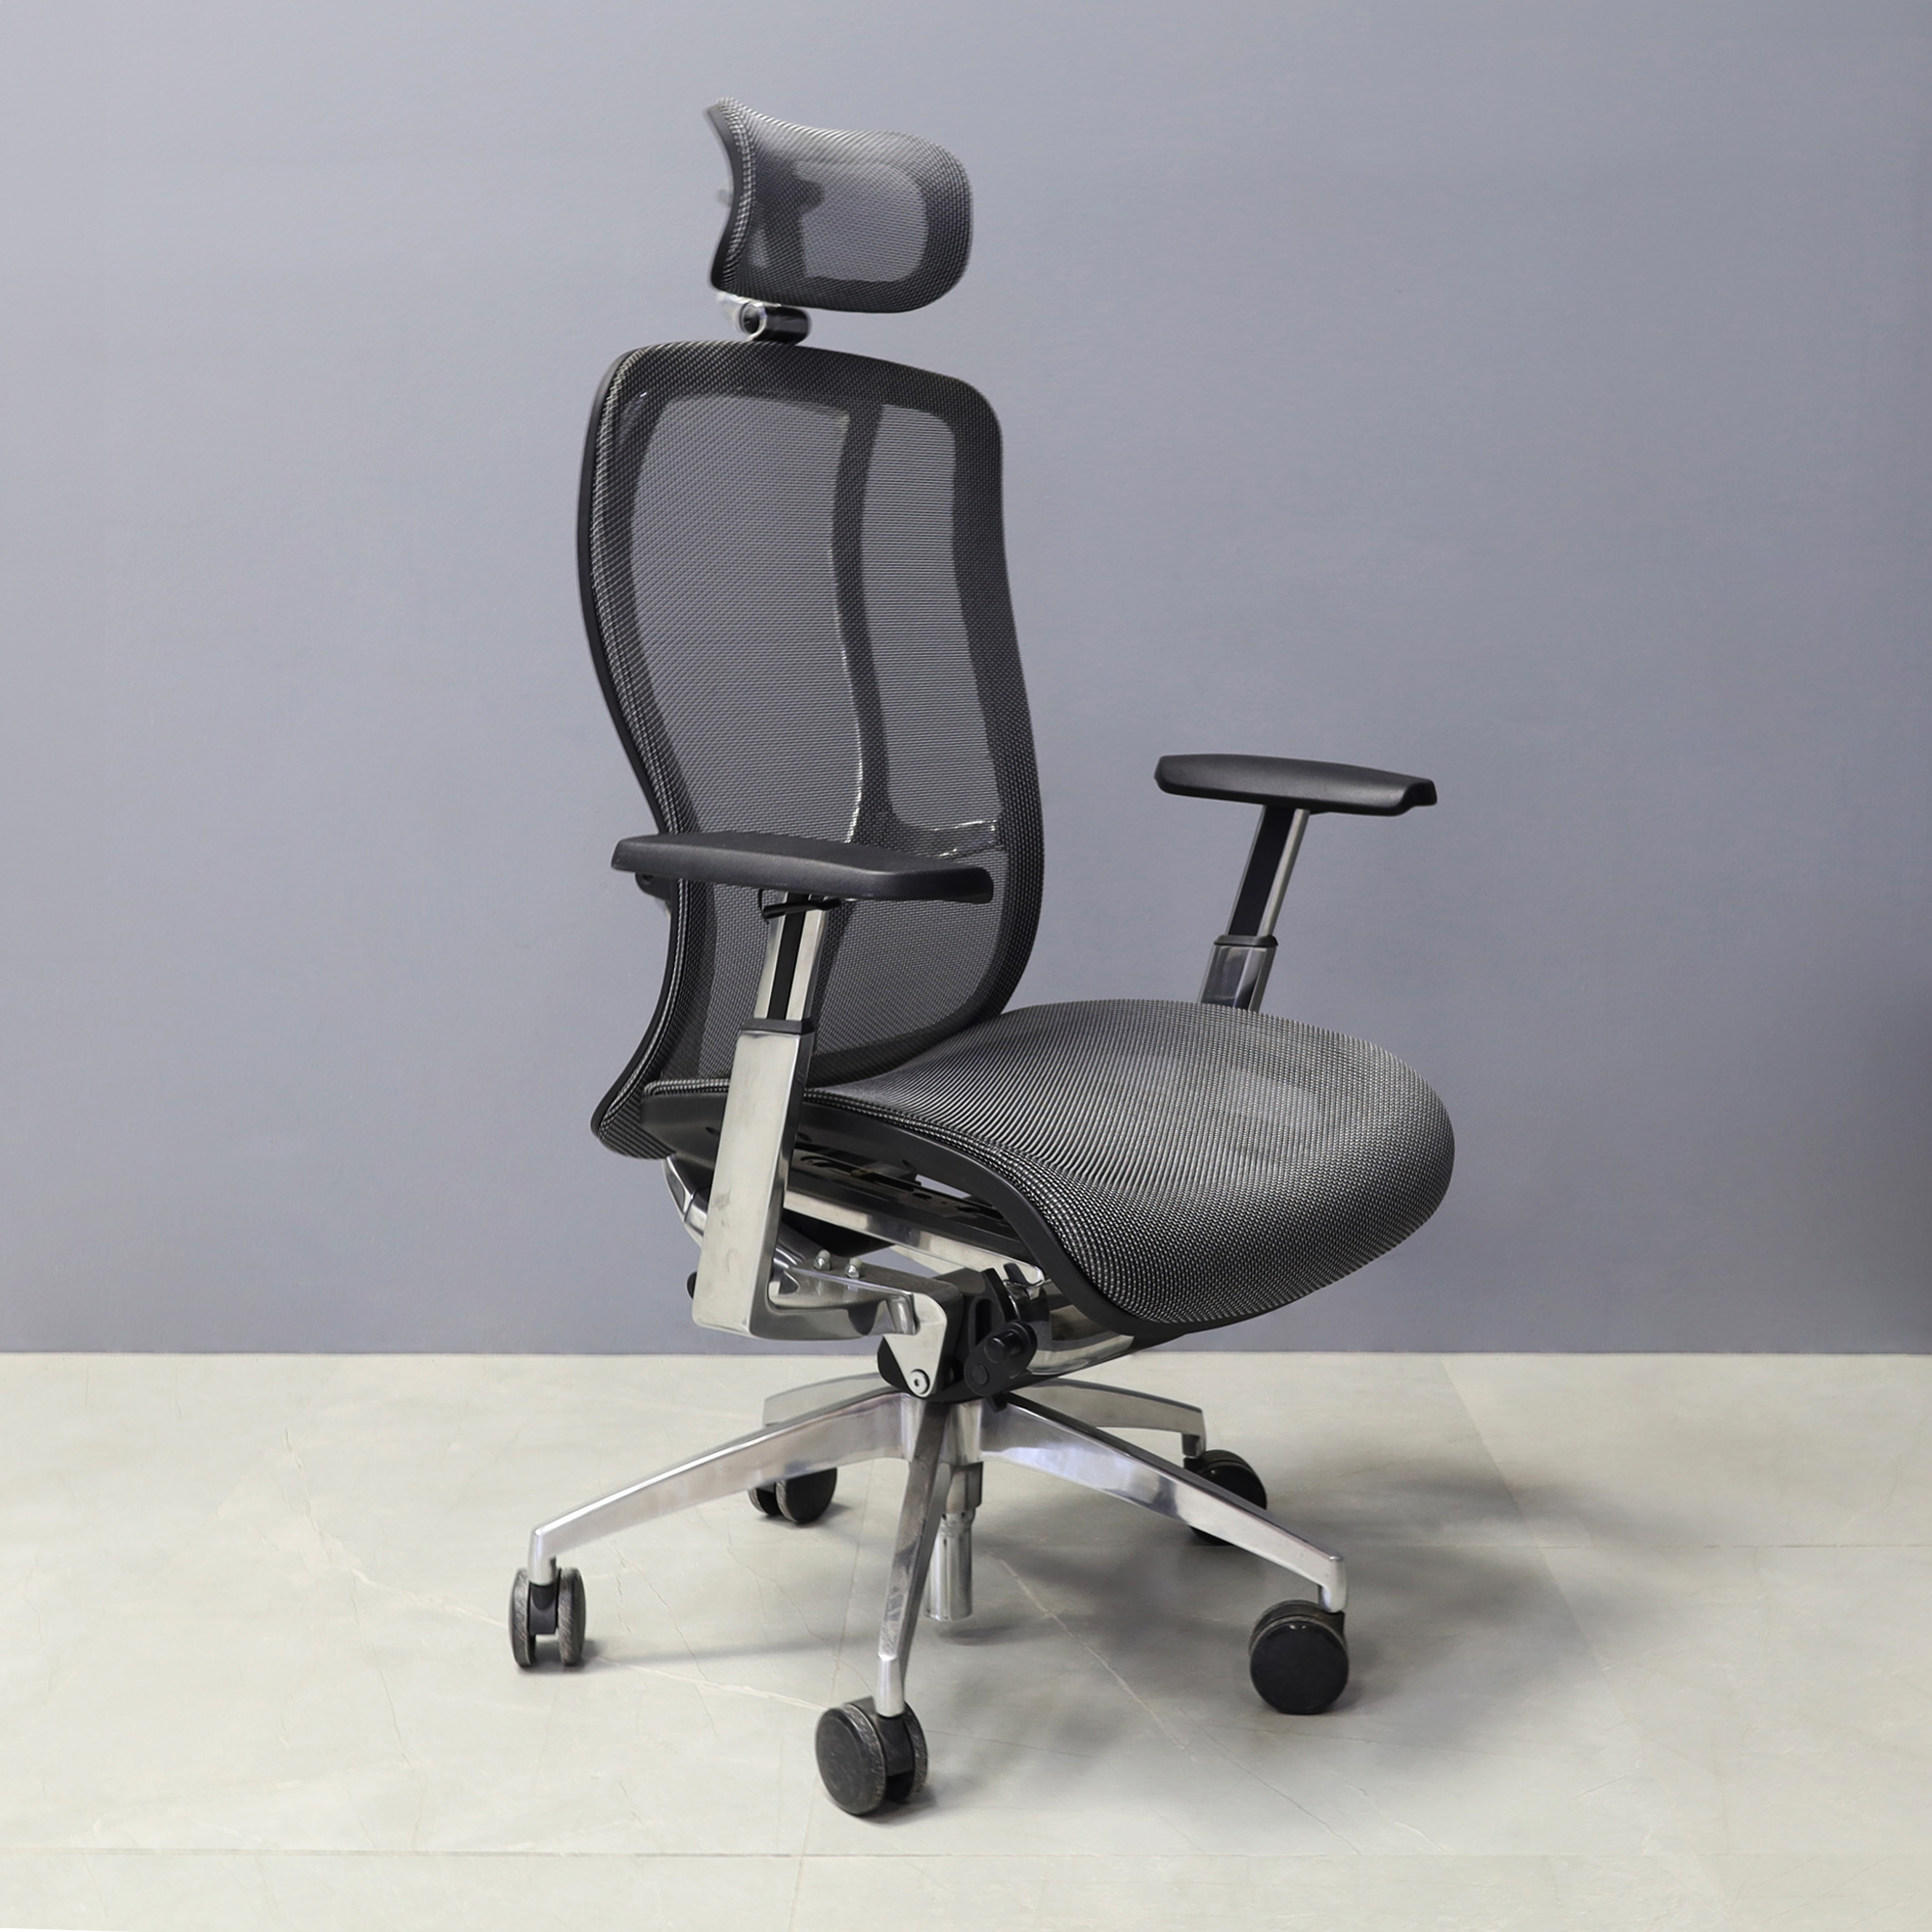 VESTA Ergonomic High Back Mesh Executive Desk Chair, shown here.